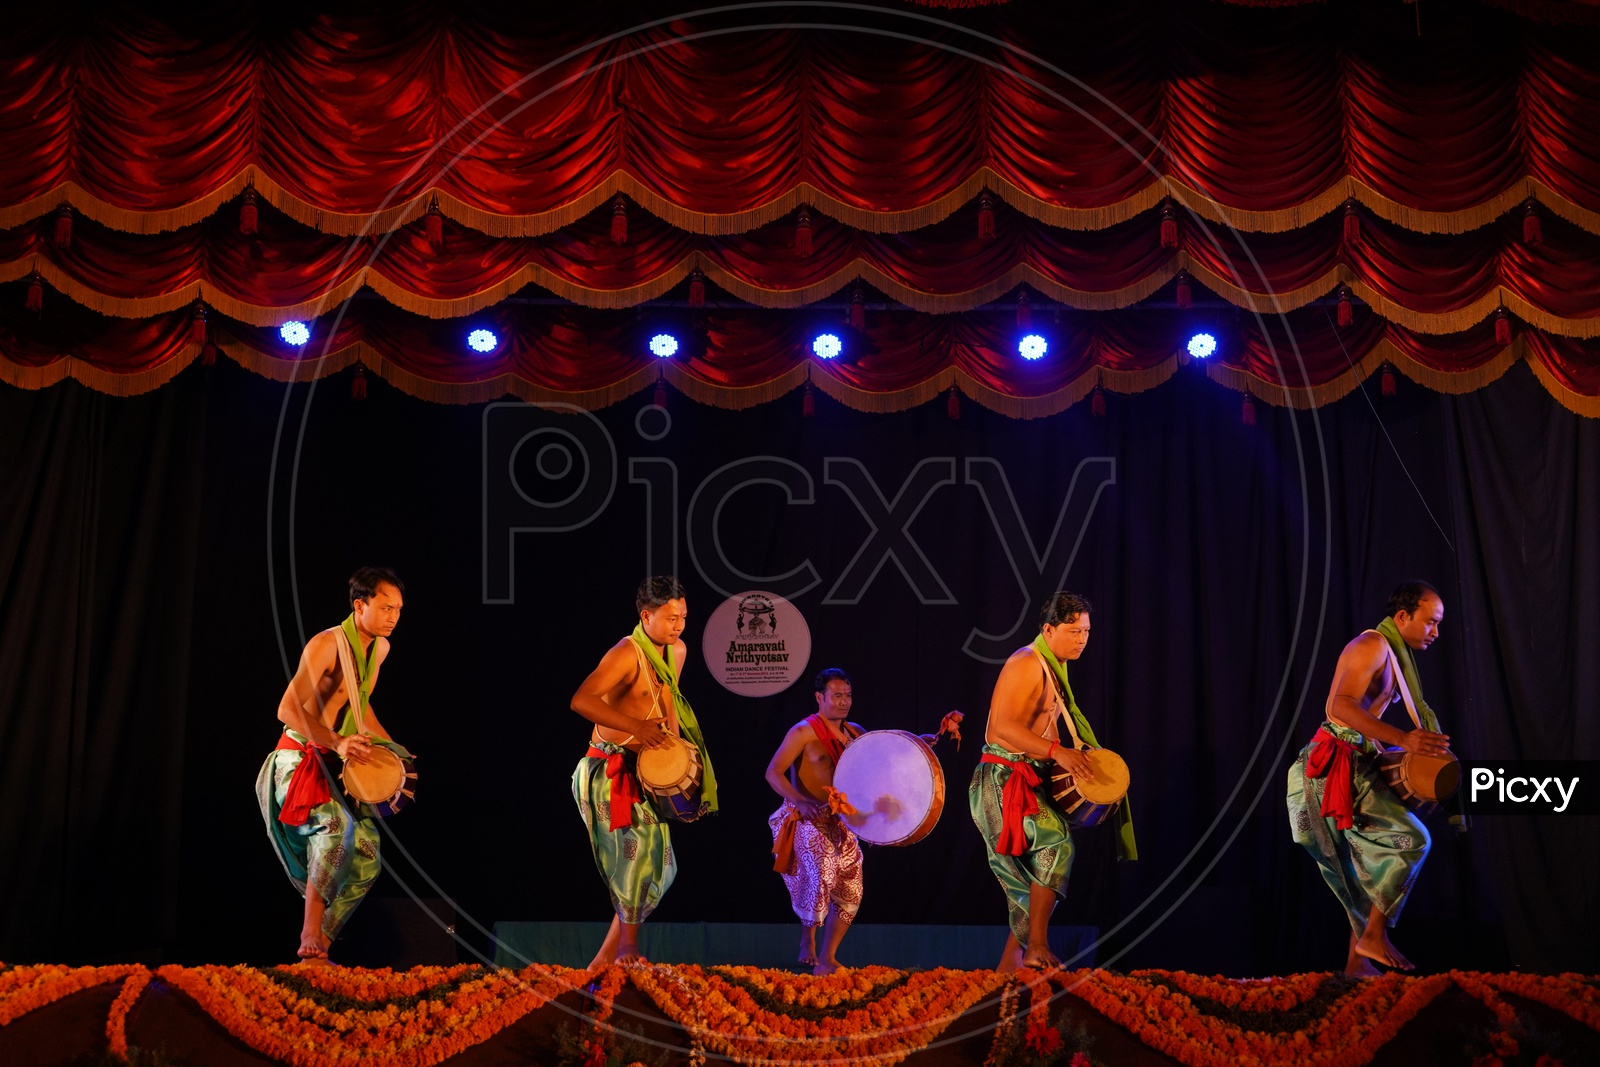 Traditional Dance Performance at Amaravati Nrityotsav in Vijayawada